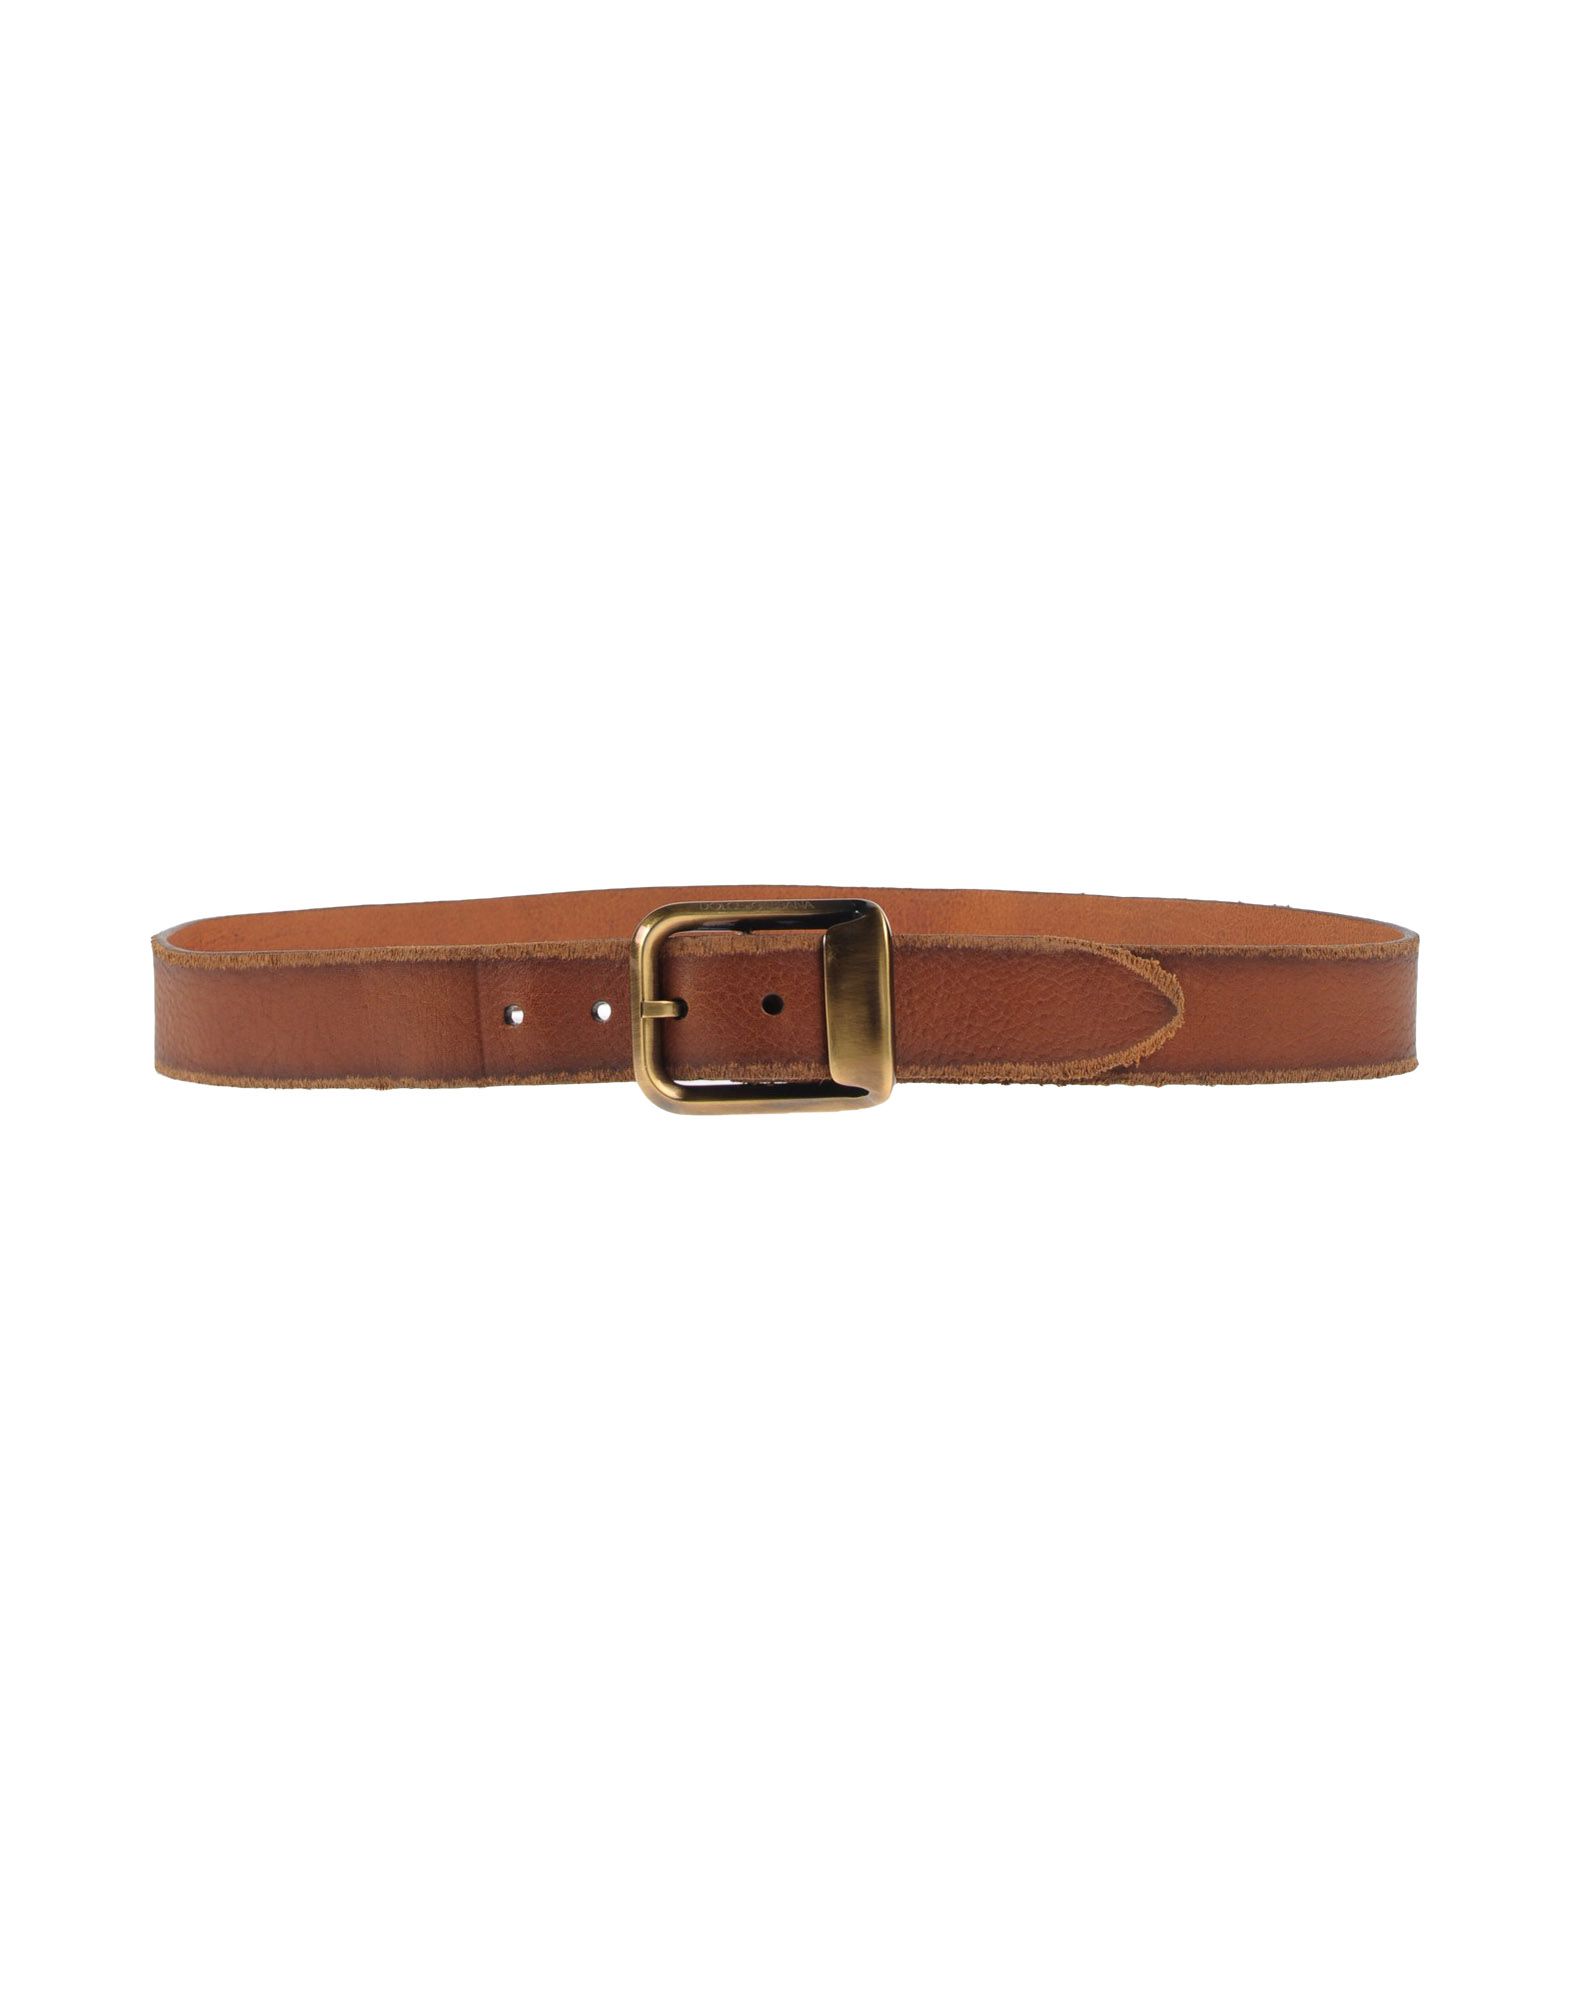 Dolce & Gabbana Leather Belt   Men Dolce & Gabbana Leather Belts   46438346